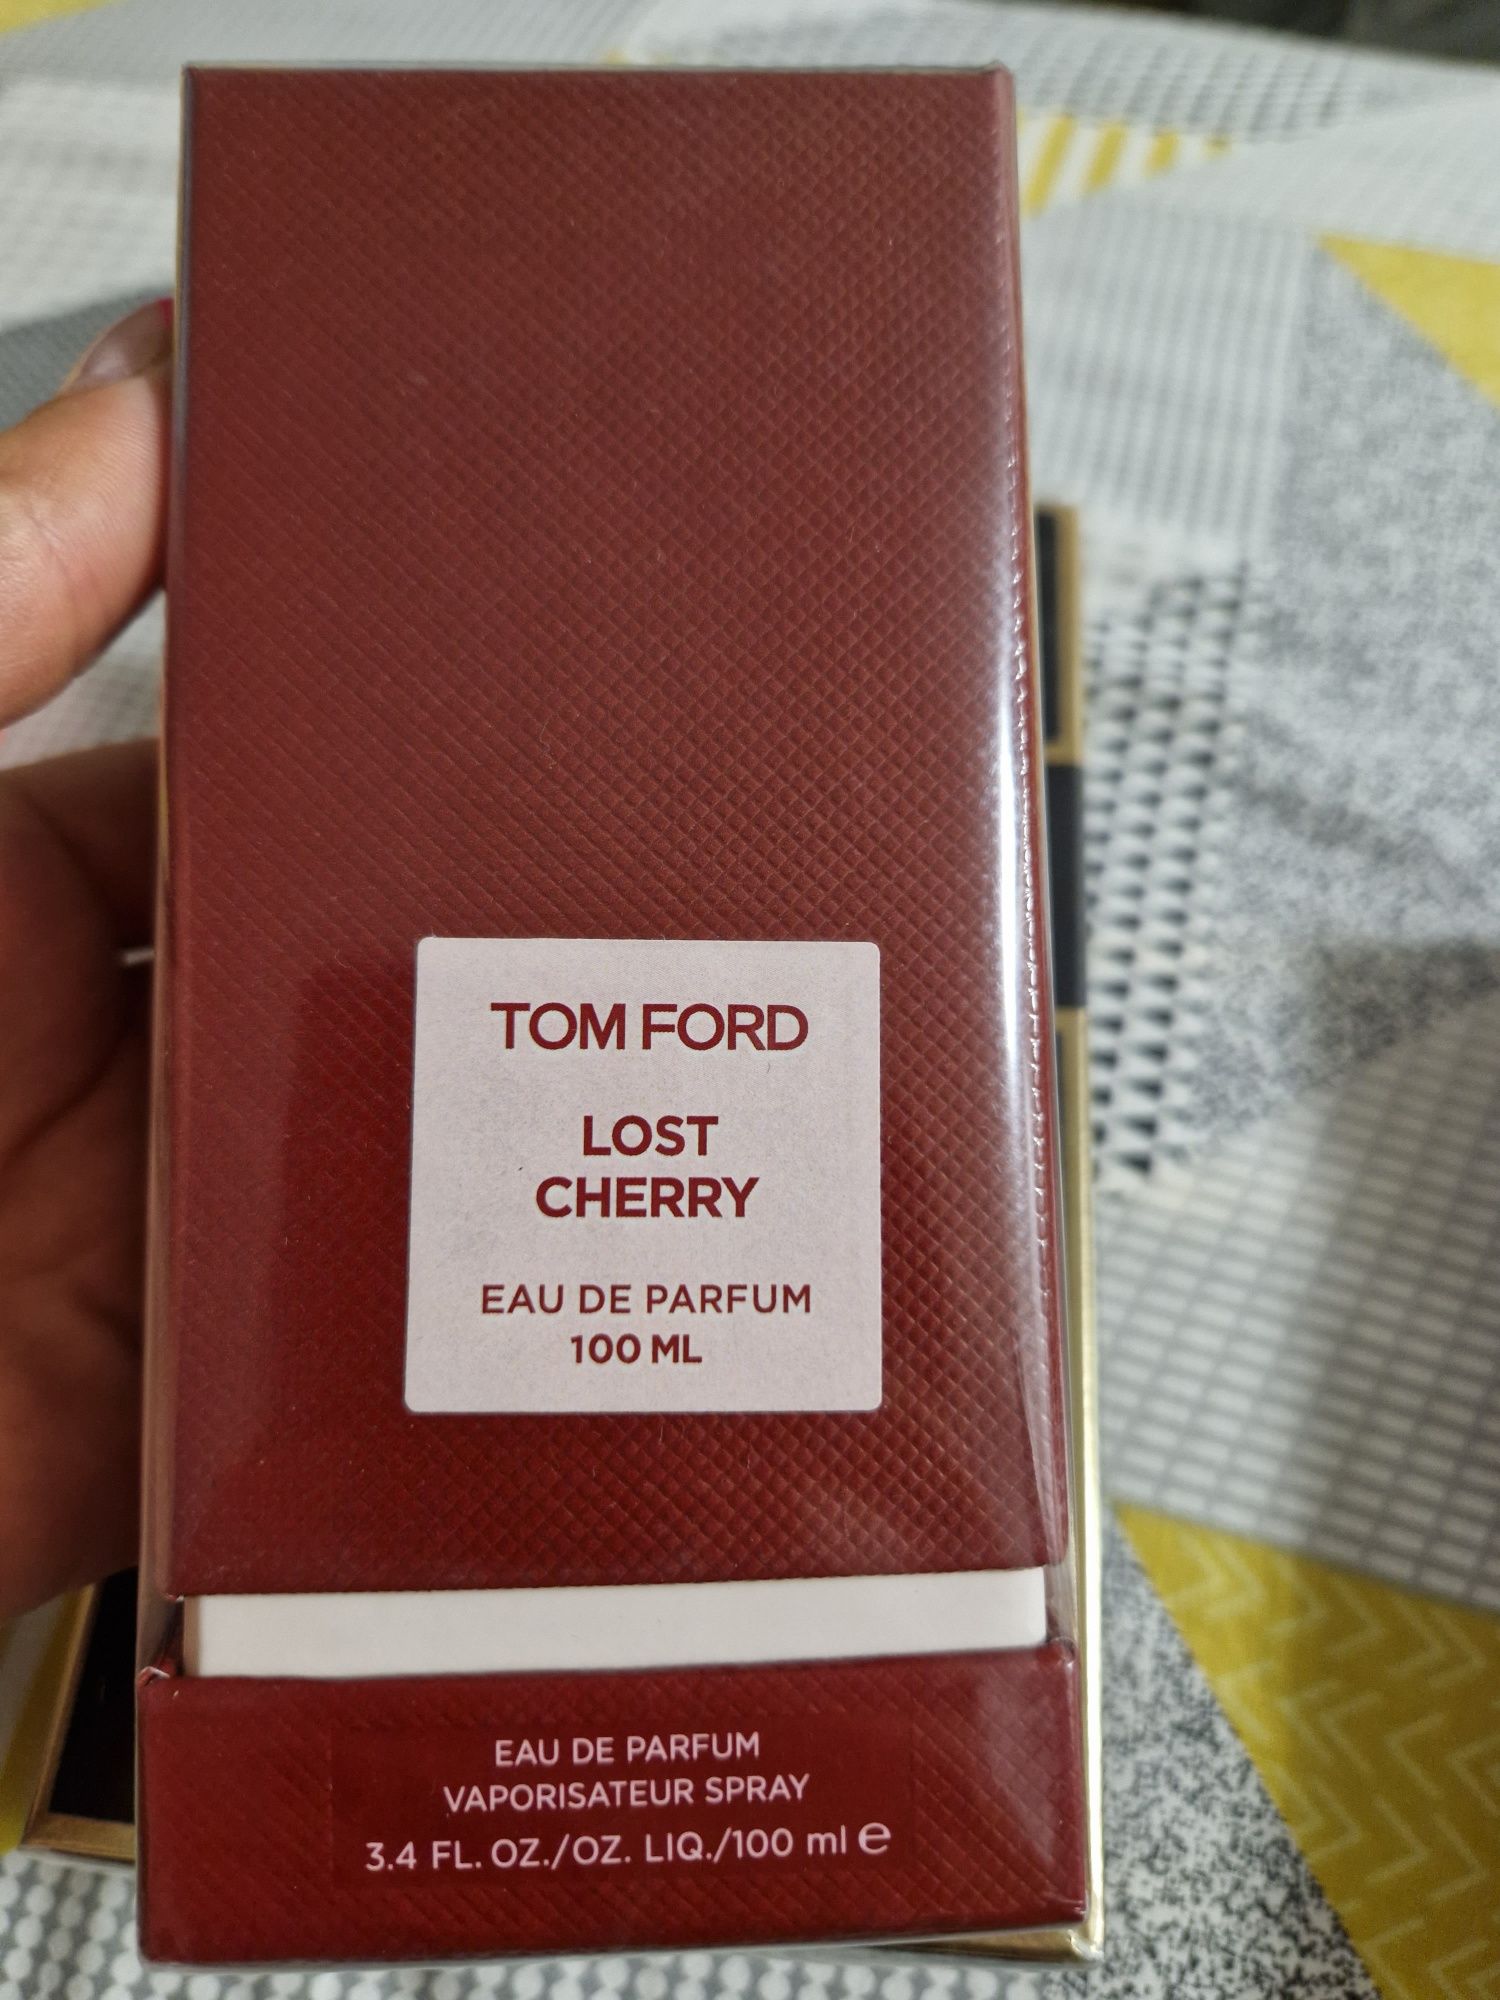 Tom fort lost chery